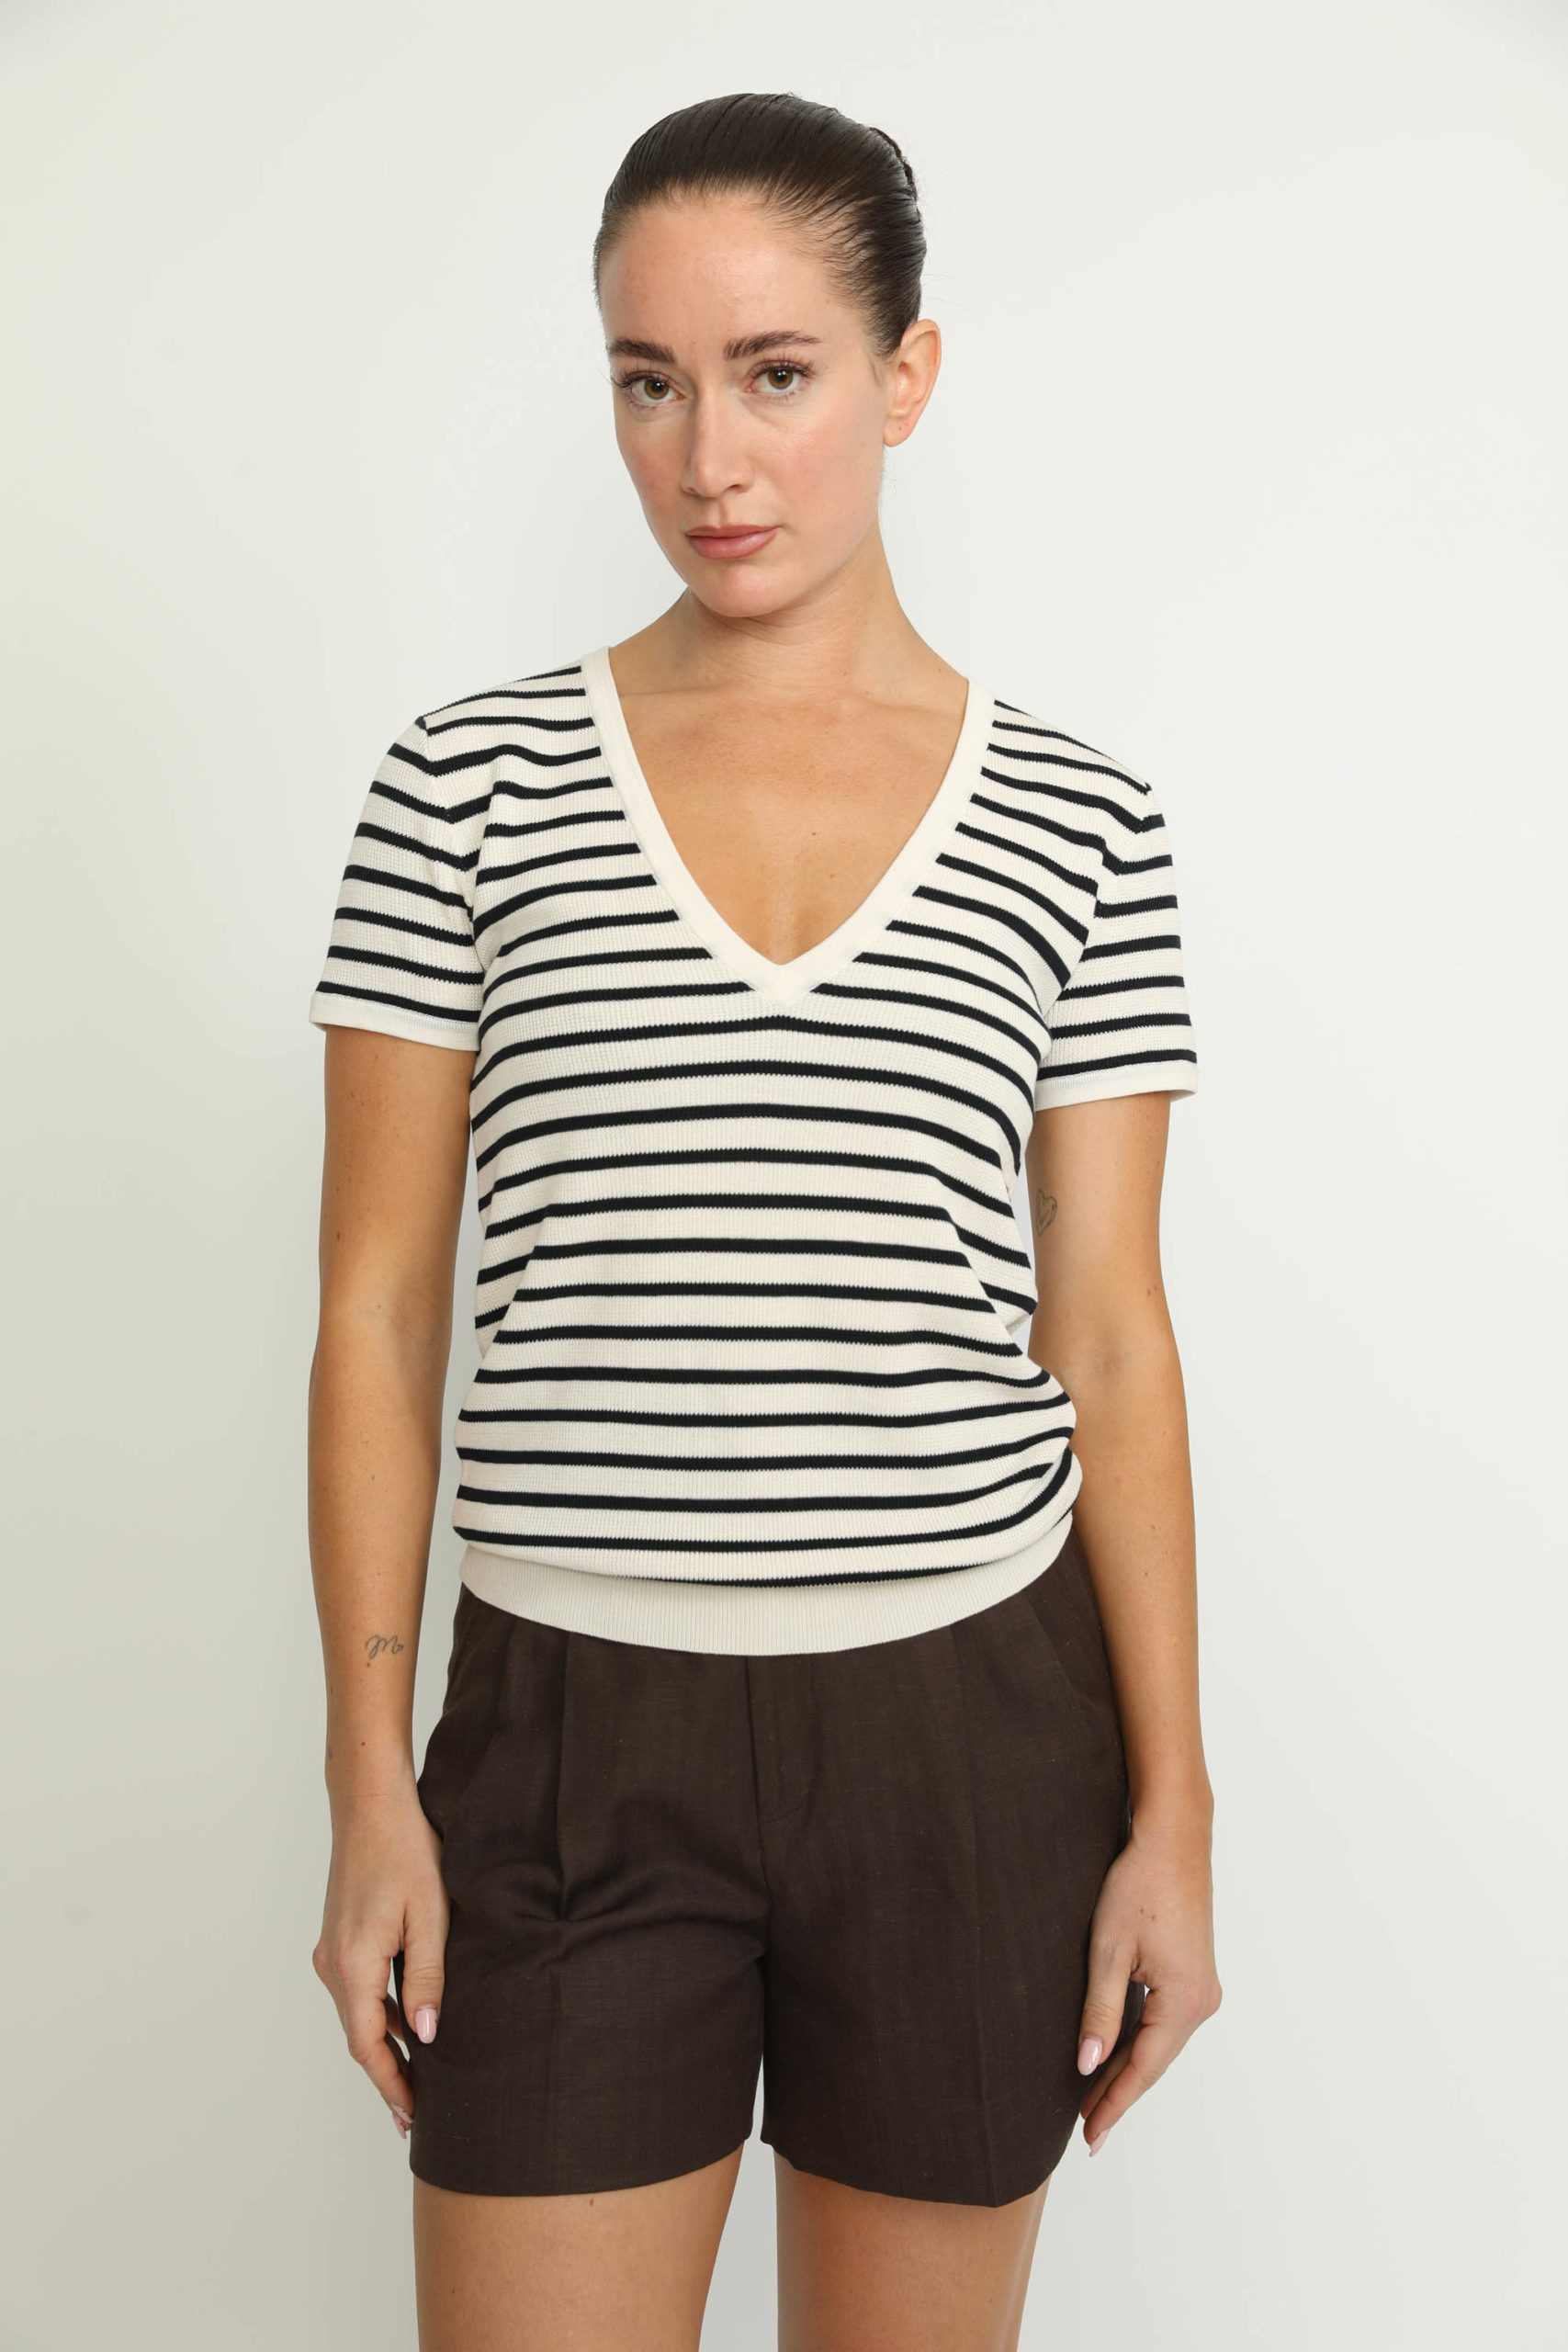 Pisa – Pisa V-neck T-shirt in Navy/ White Stripe0